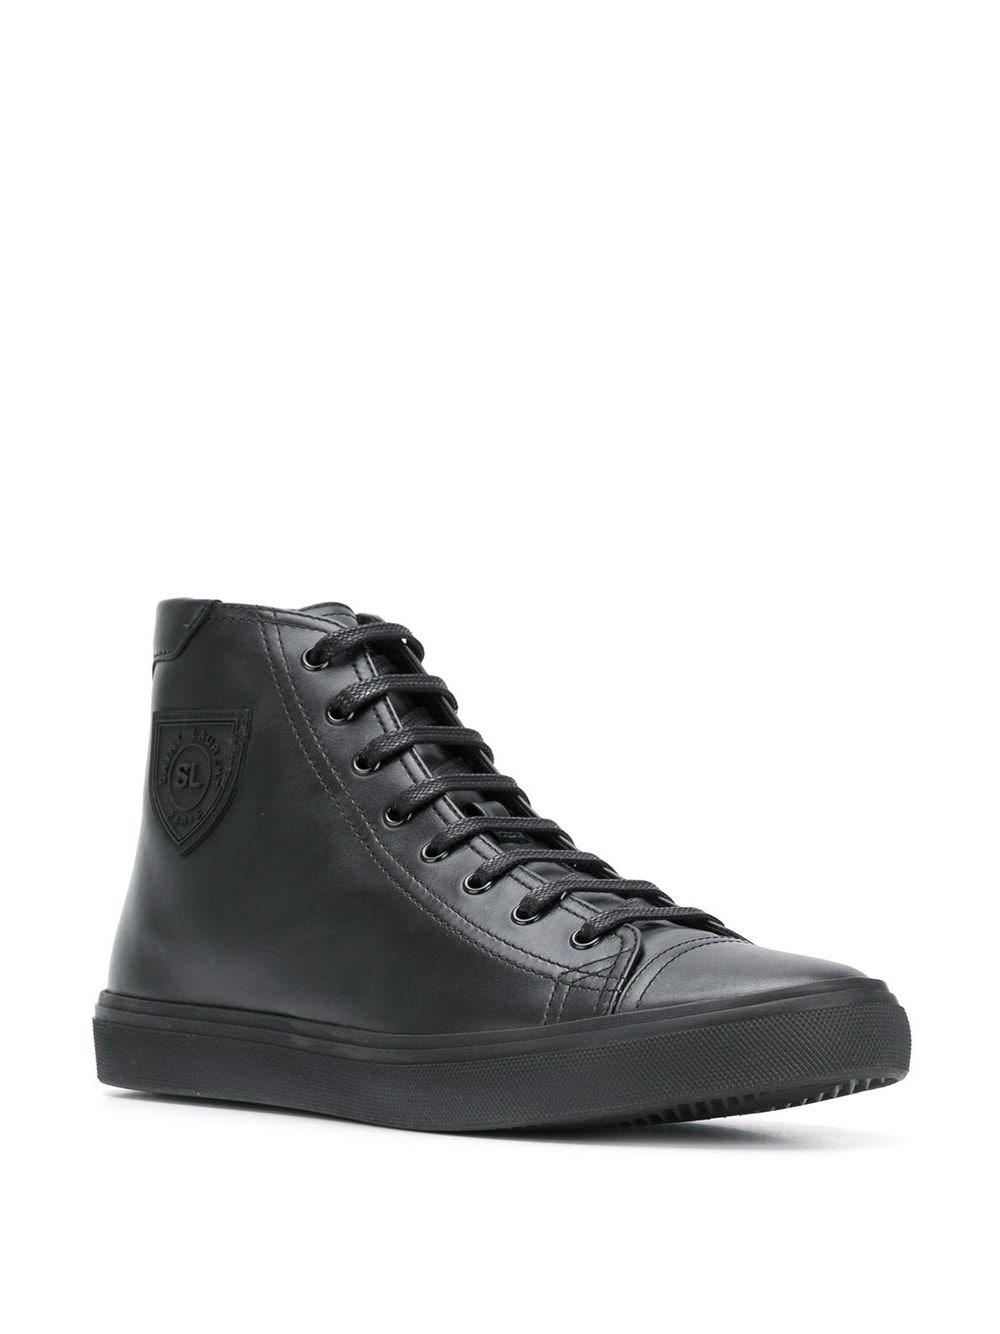 Saint Laurent Leather Bedford Sneakers in Black for Men | Lyst